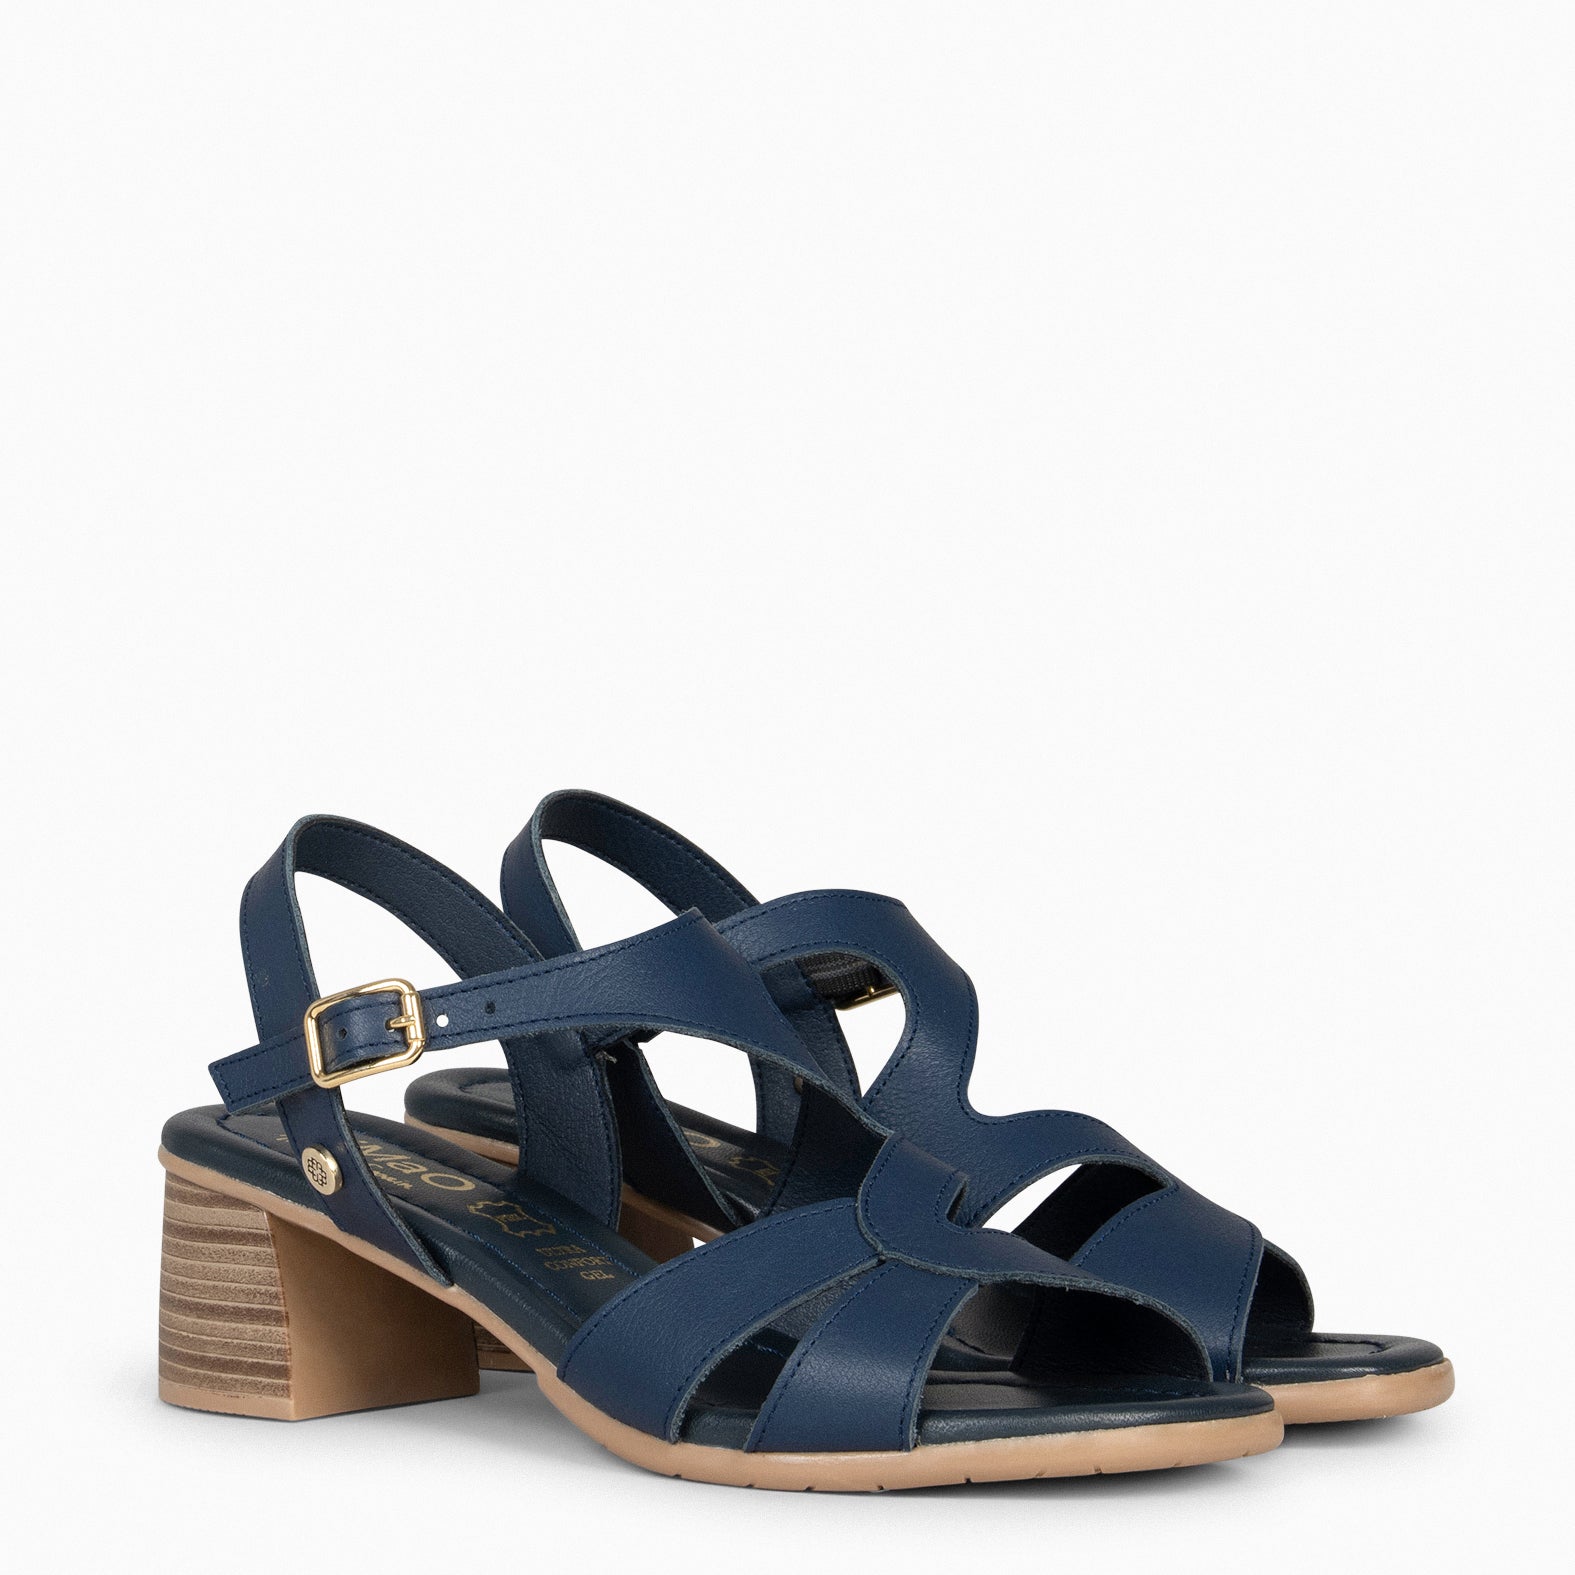 ESTRELLA – NAVY wide-heeled sandals